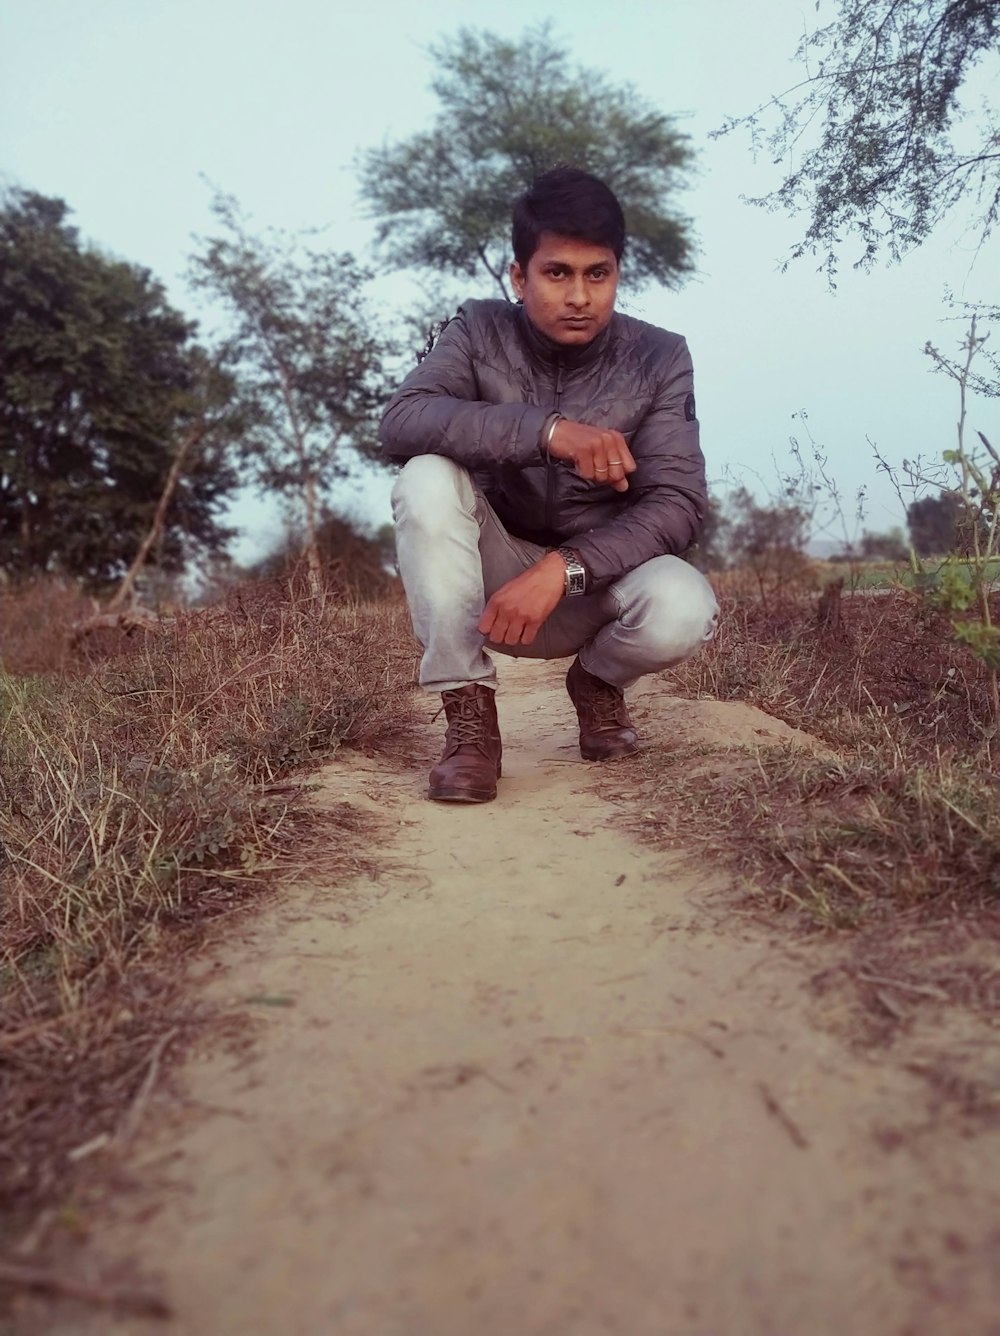 a man squatting down on a dirt path